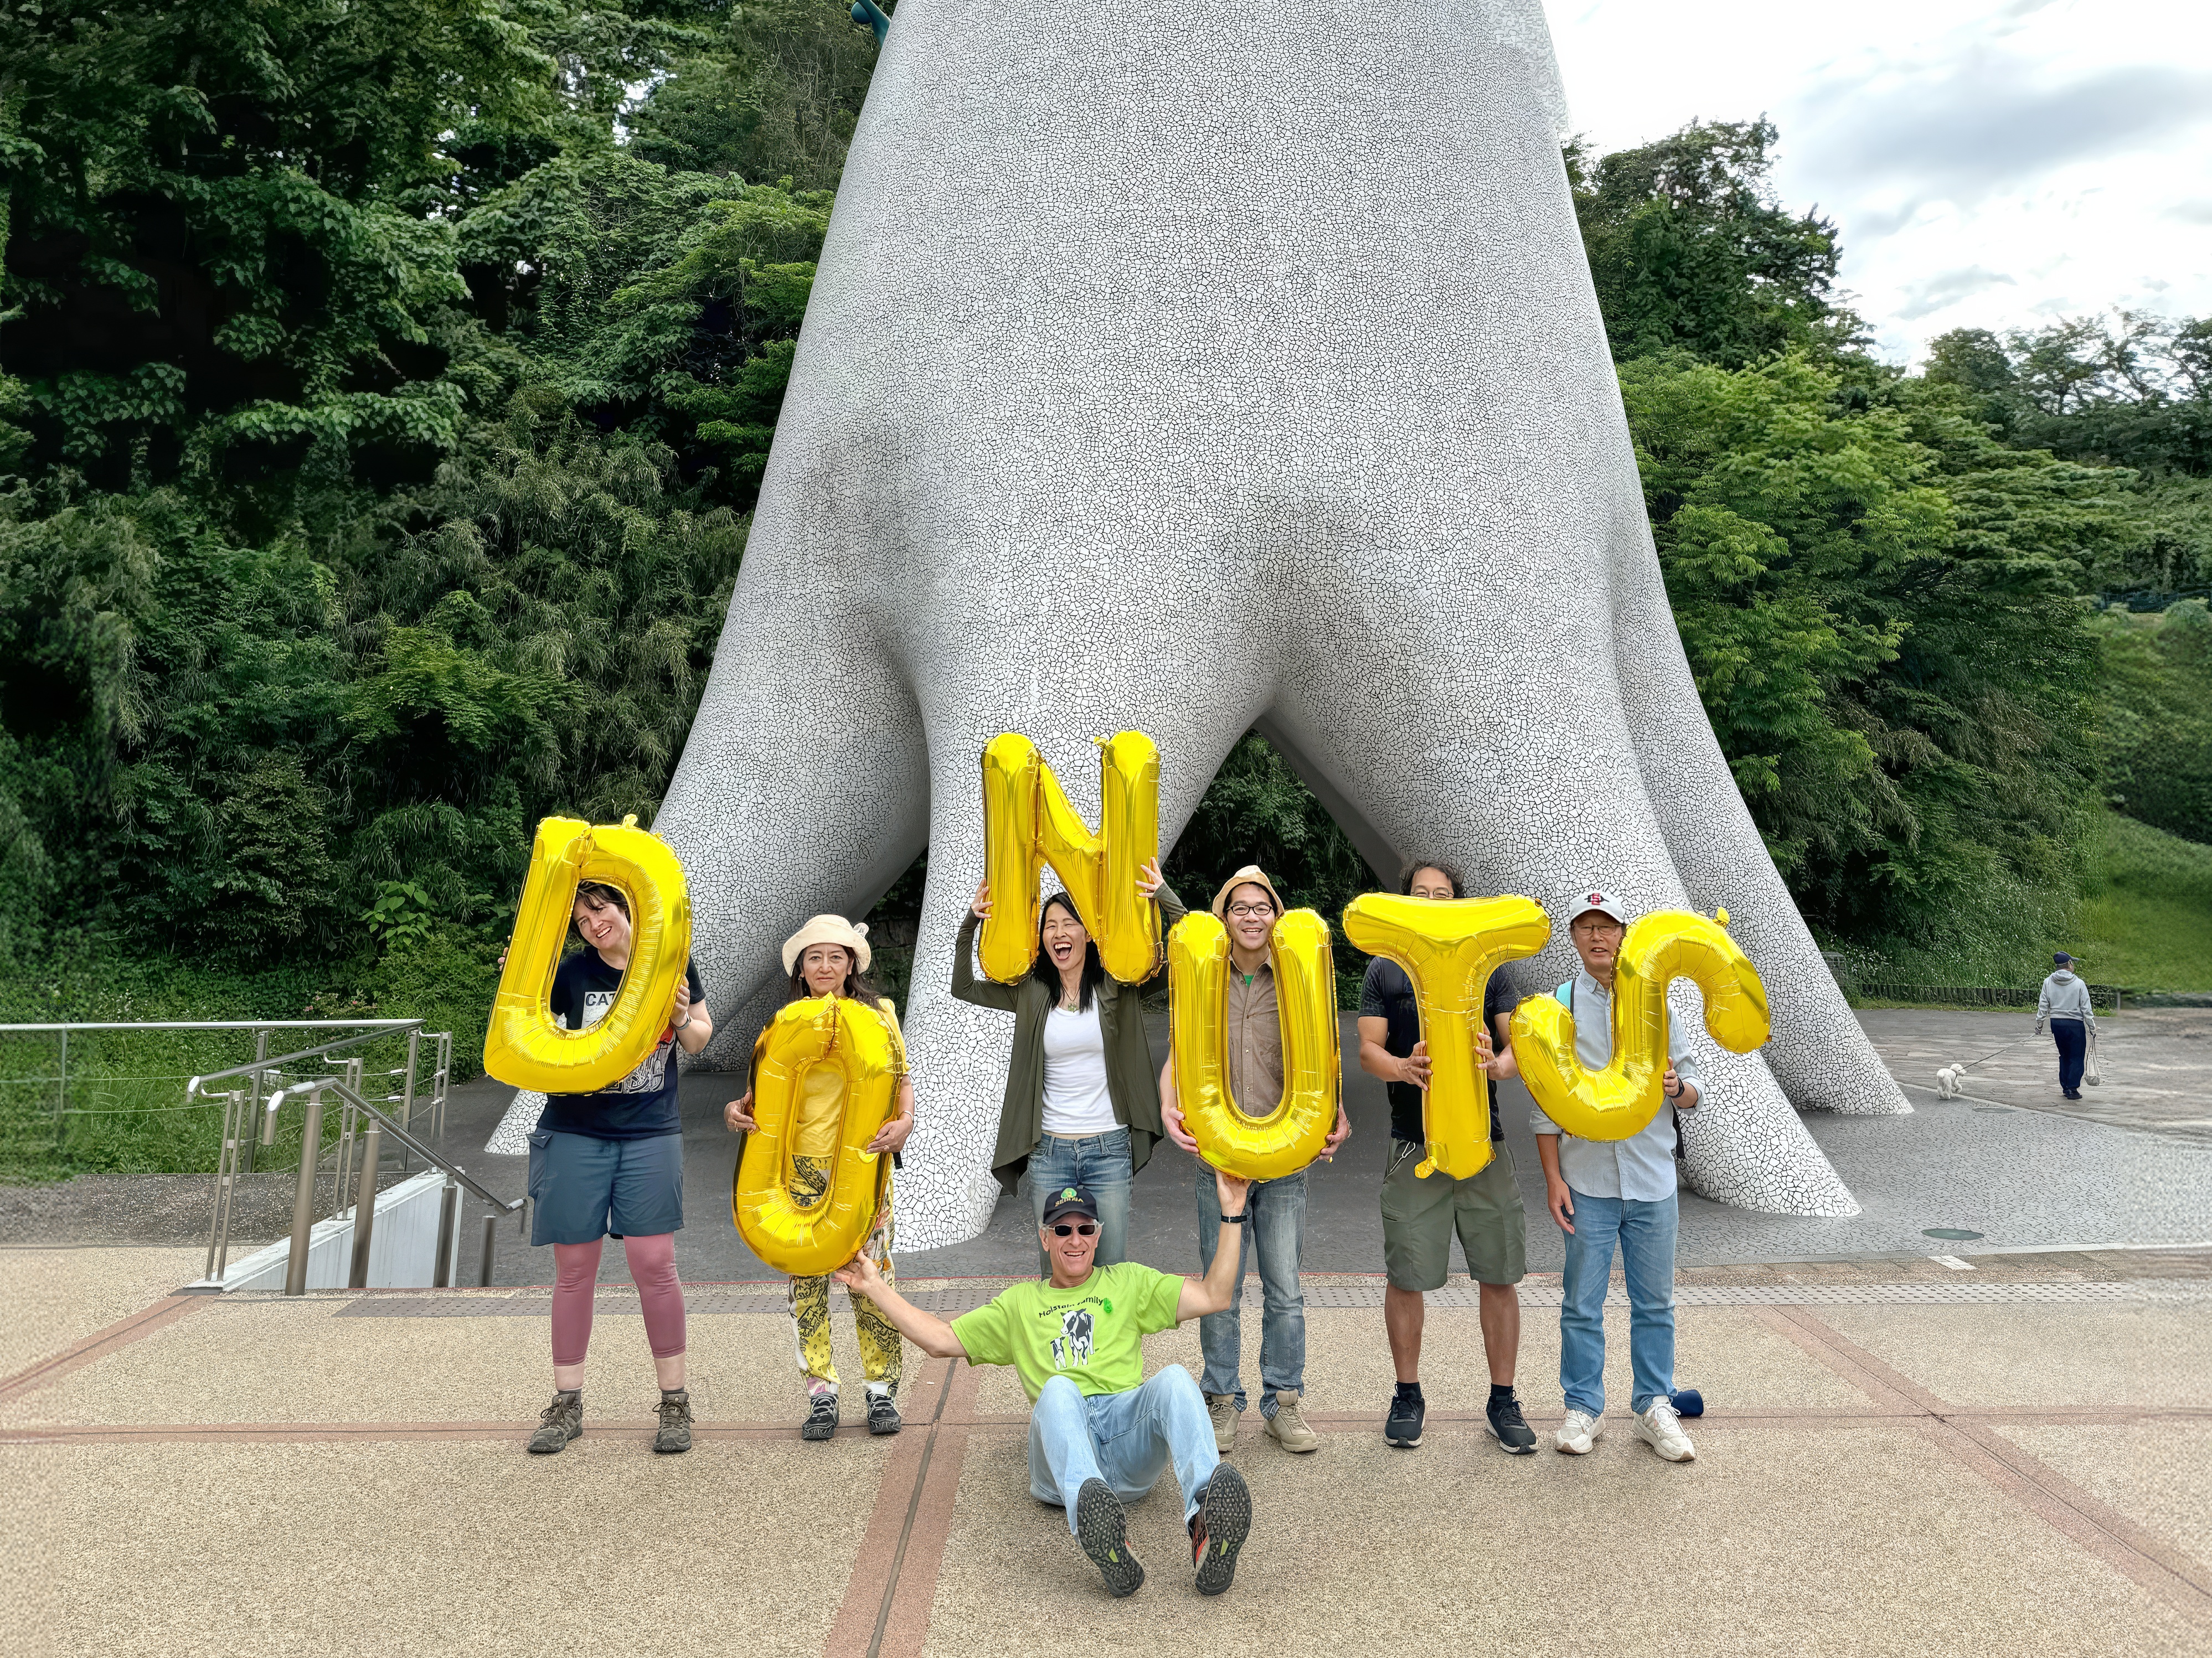 Japan, Kawasaki, Tower of Mother (母の塔) - Donuts, Silence Was Golden, gold balloons